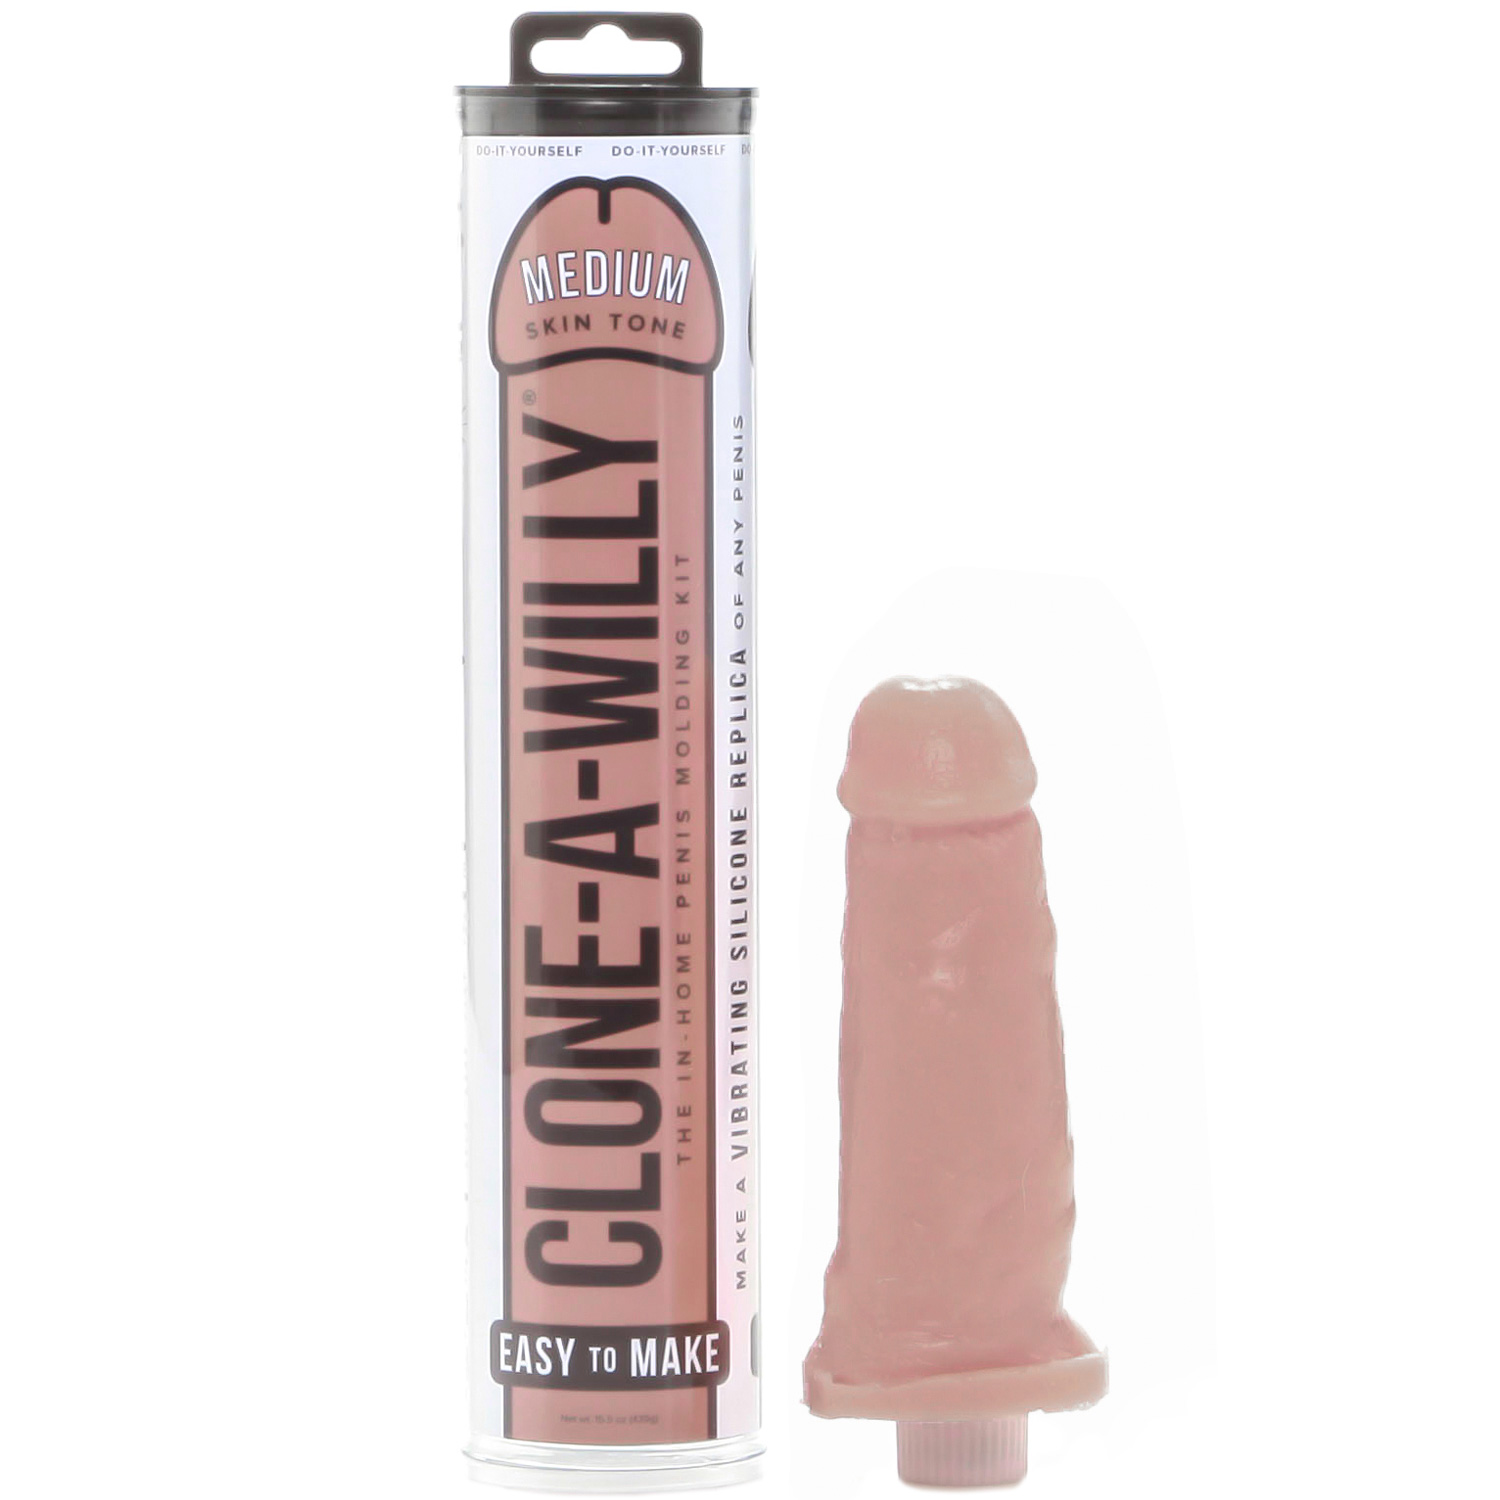 Clone-A-Willy DIY Homemade Dildo Clone Kit Medium Skin Tone - Nude